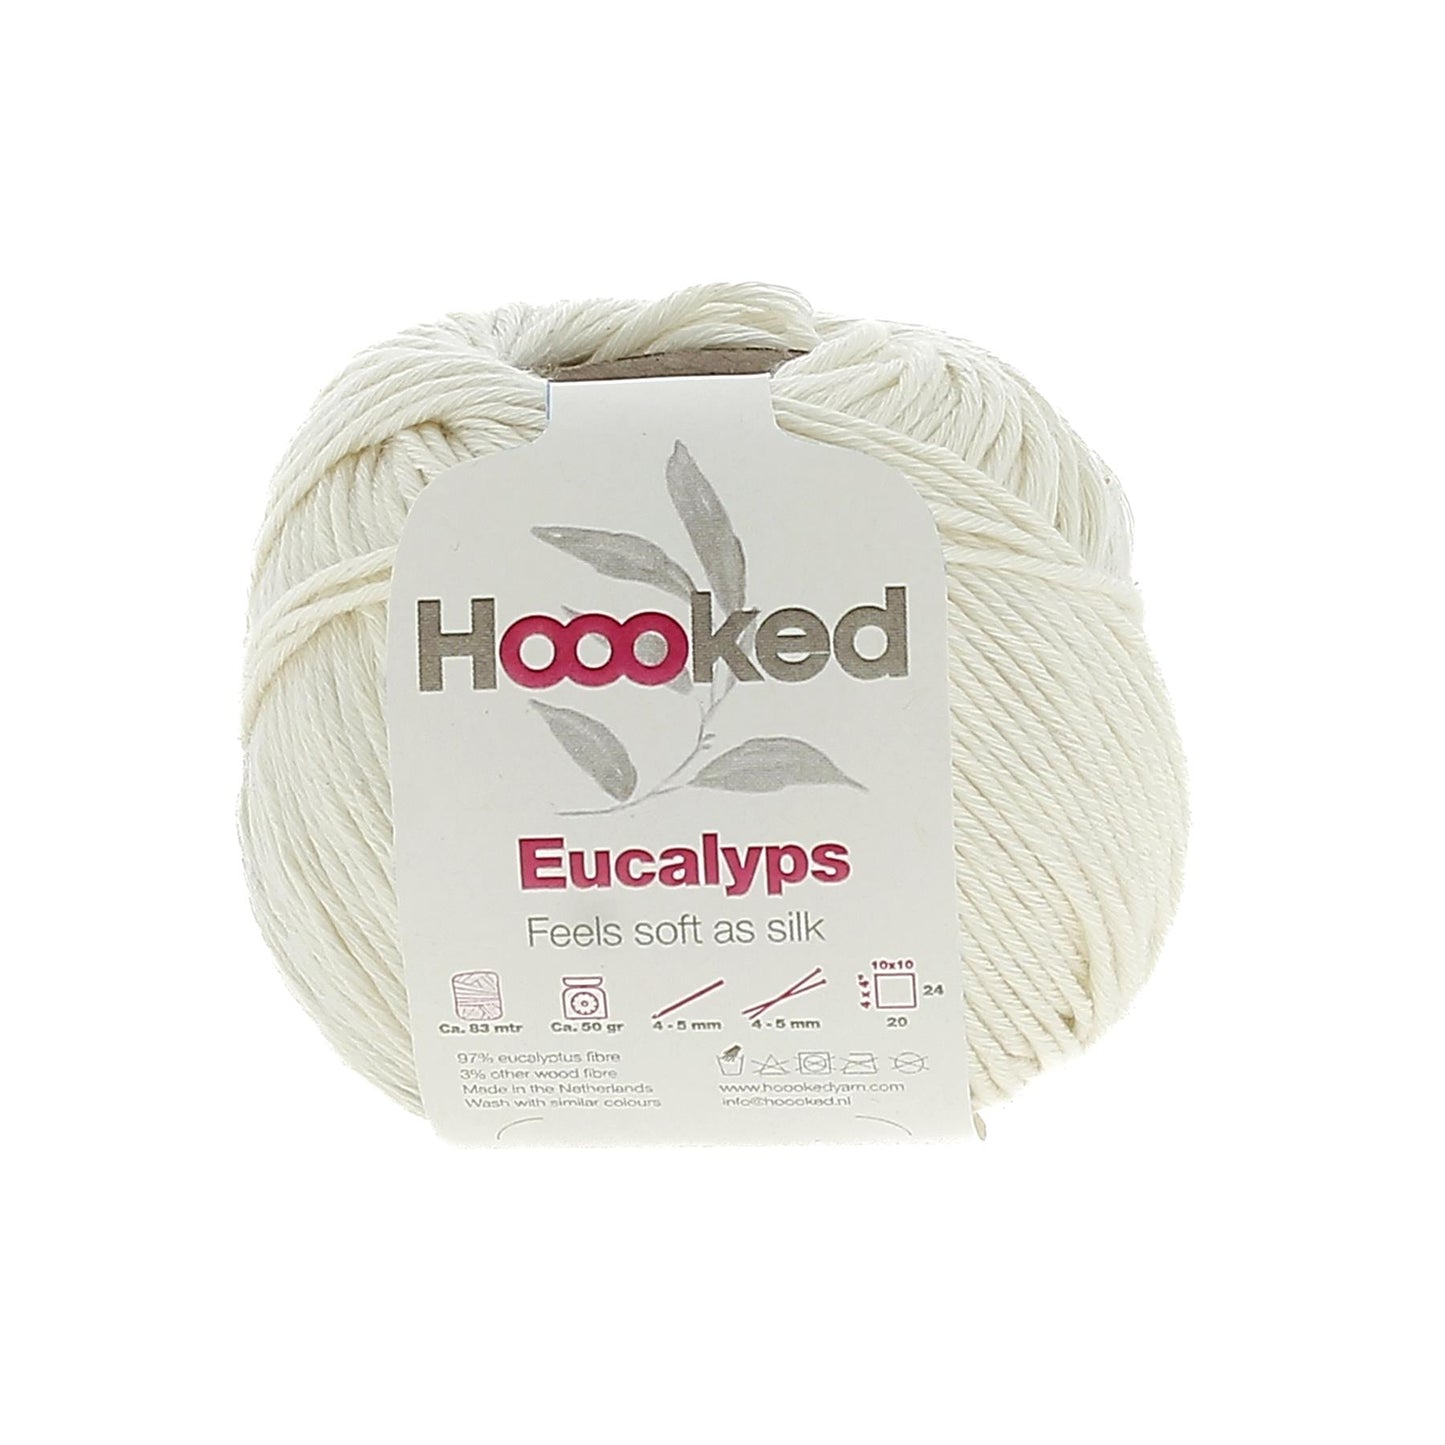 [Hoooked] EC0150G Eucalyps Bianco White Eucalyptus Yarn - 82.5M, 50g